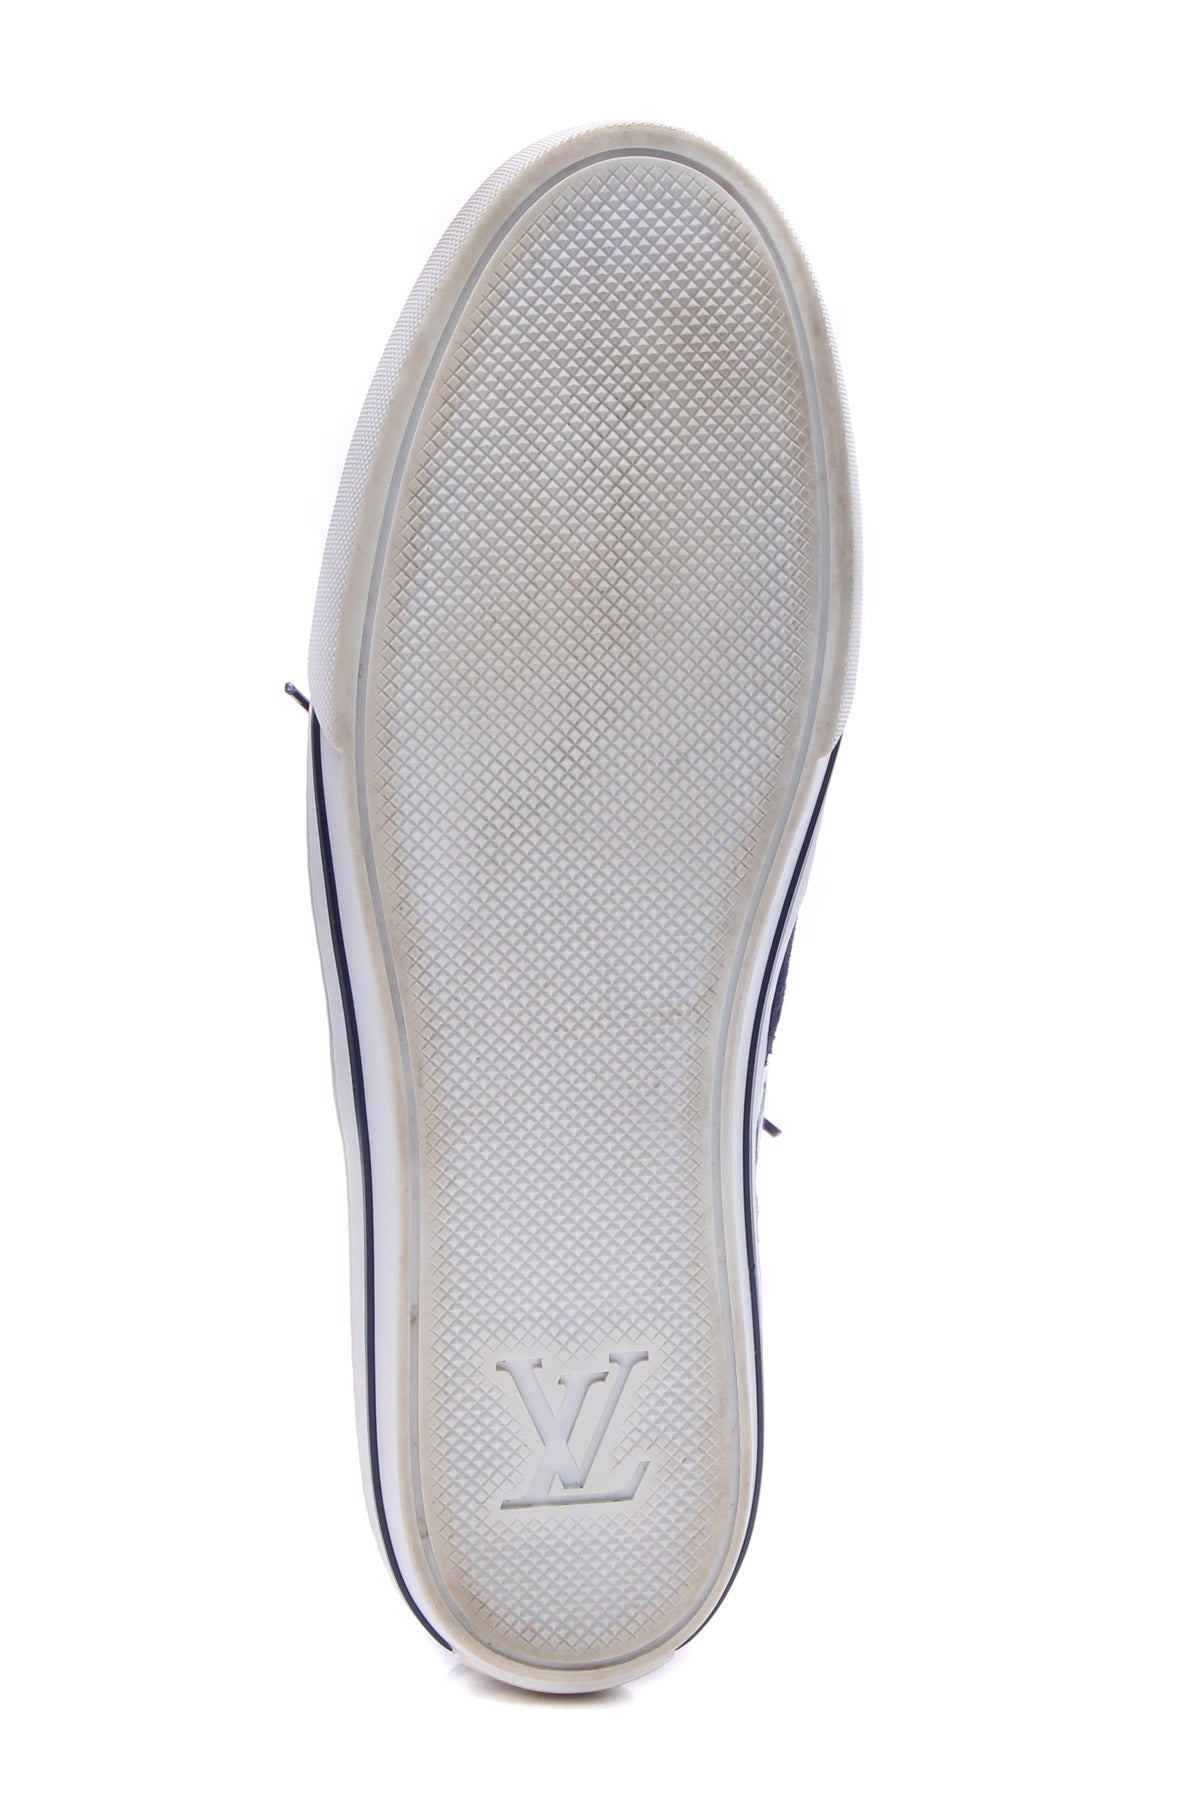 Louis Vuitton Monogram LV Sprint Sneaker